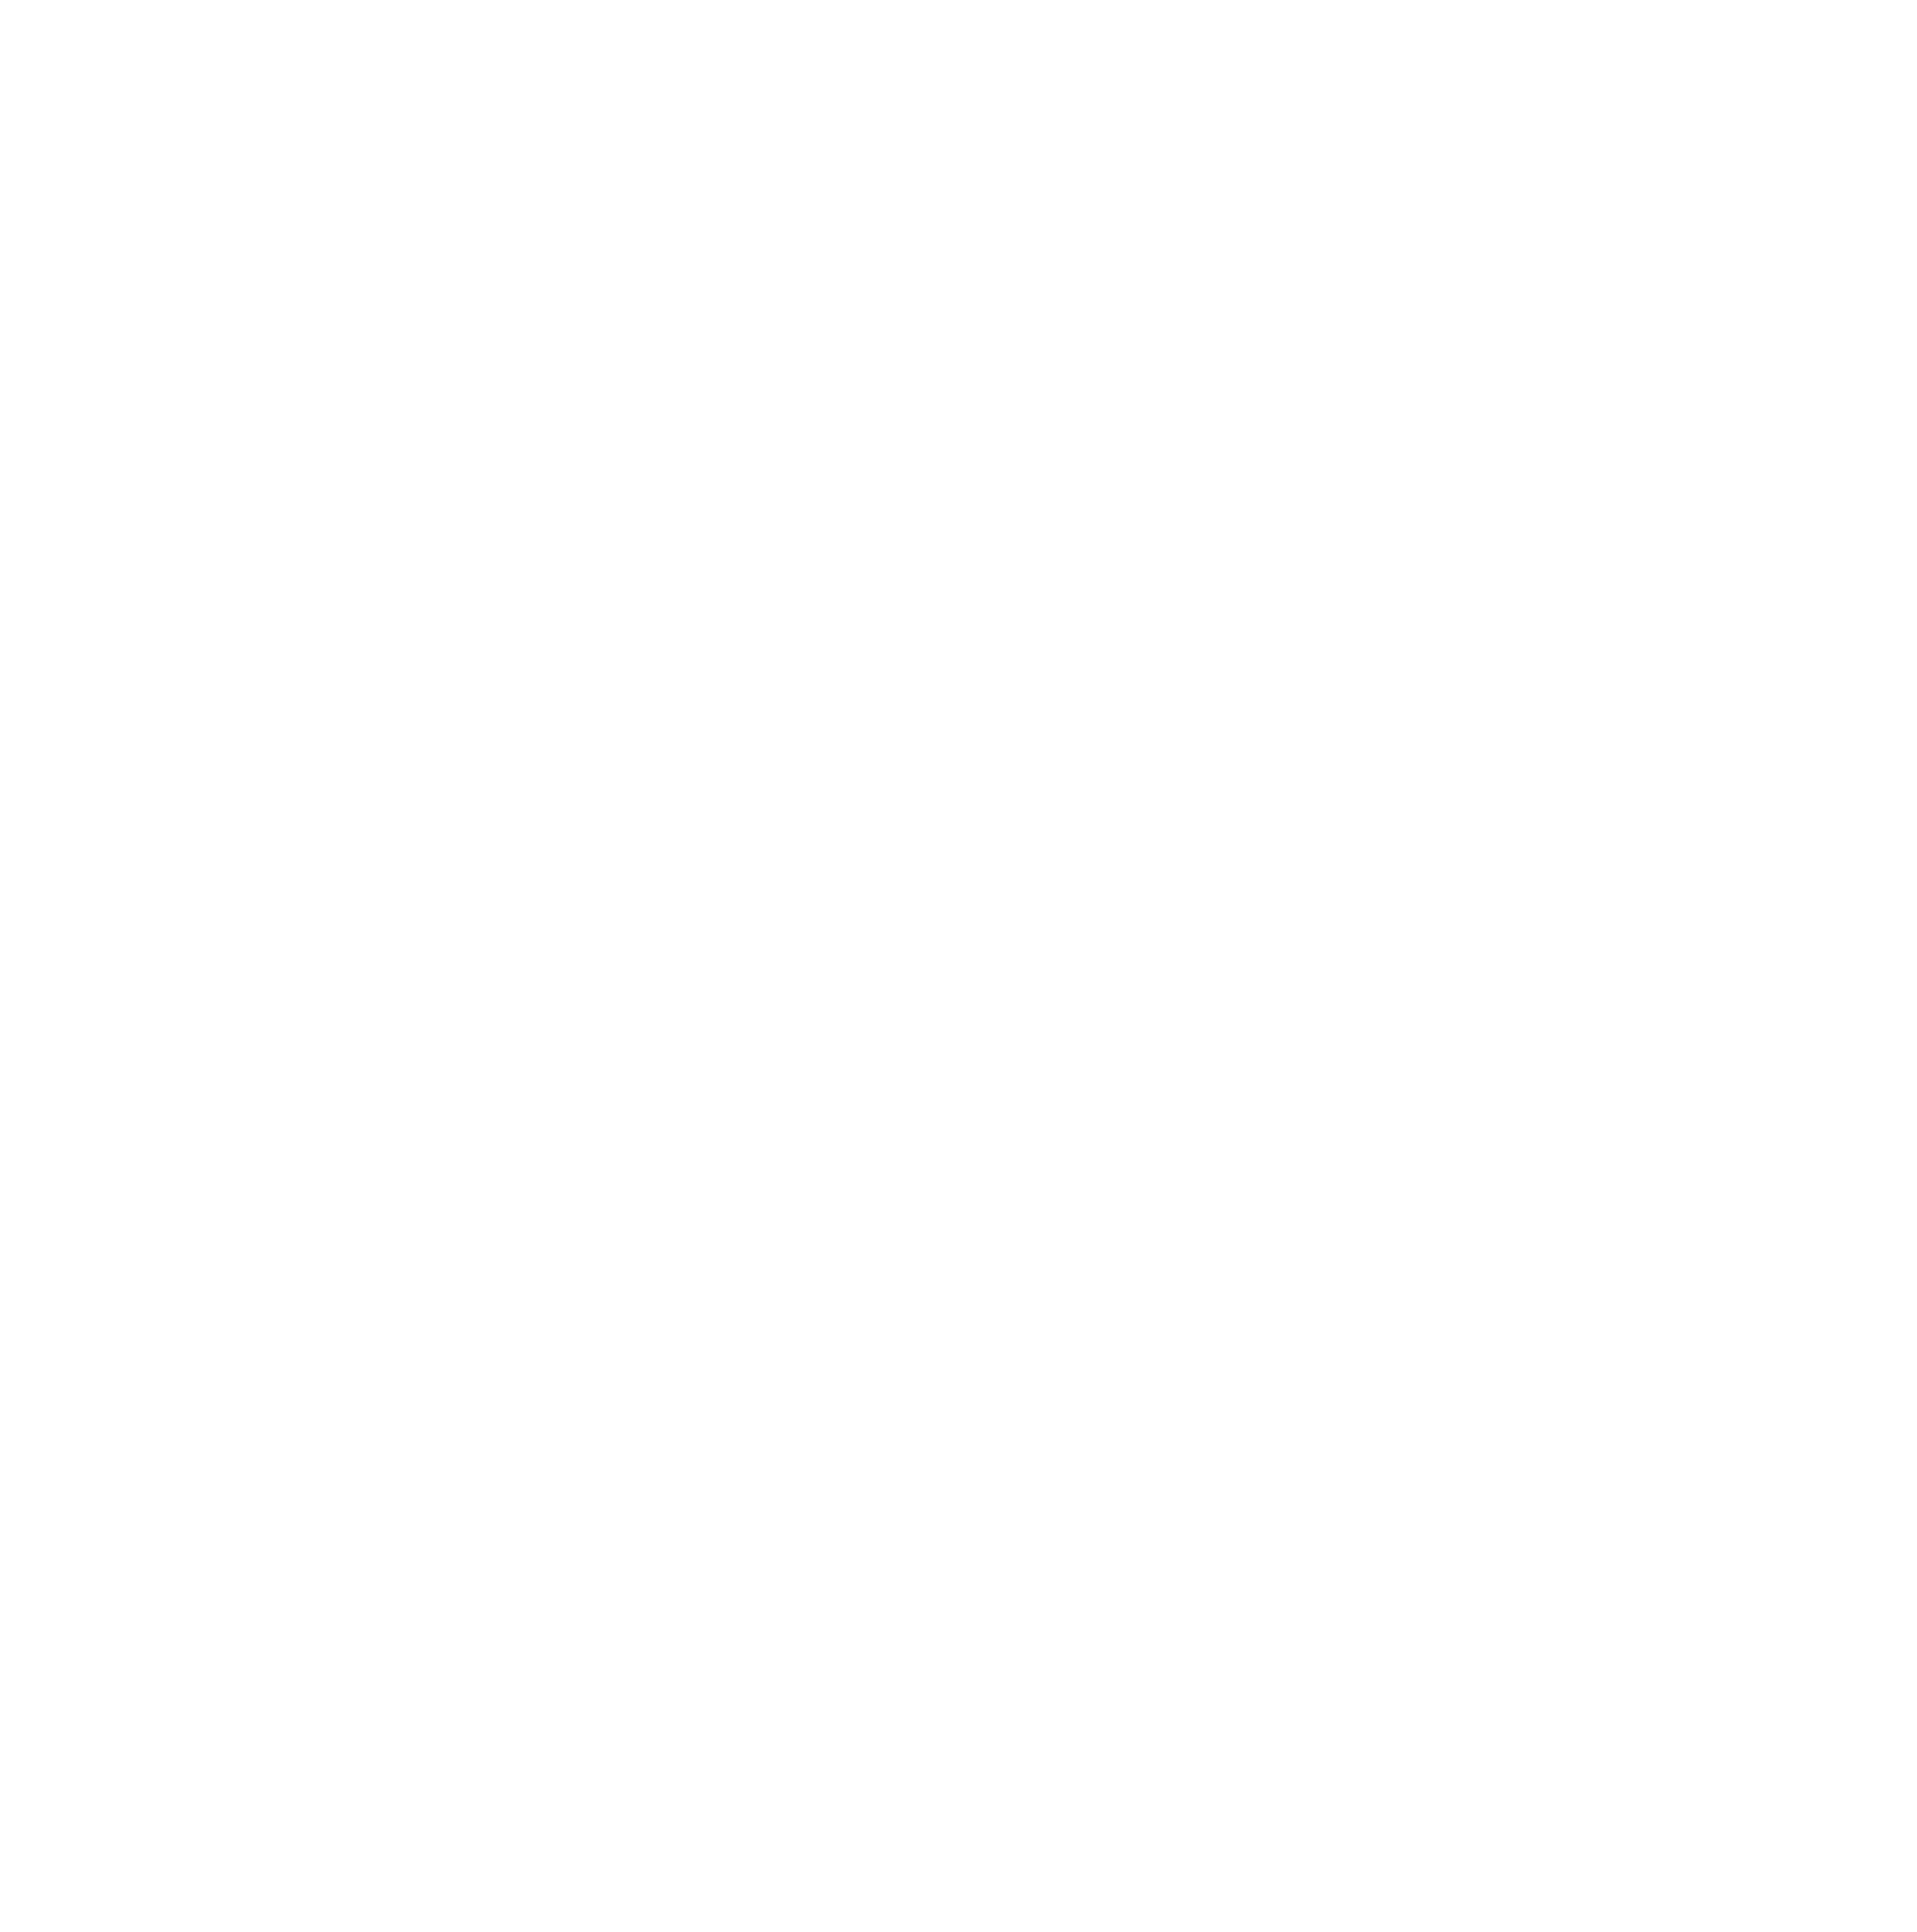 Terrier de Manchester silhouette